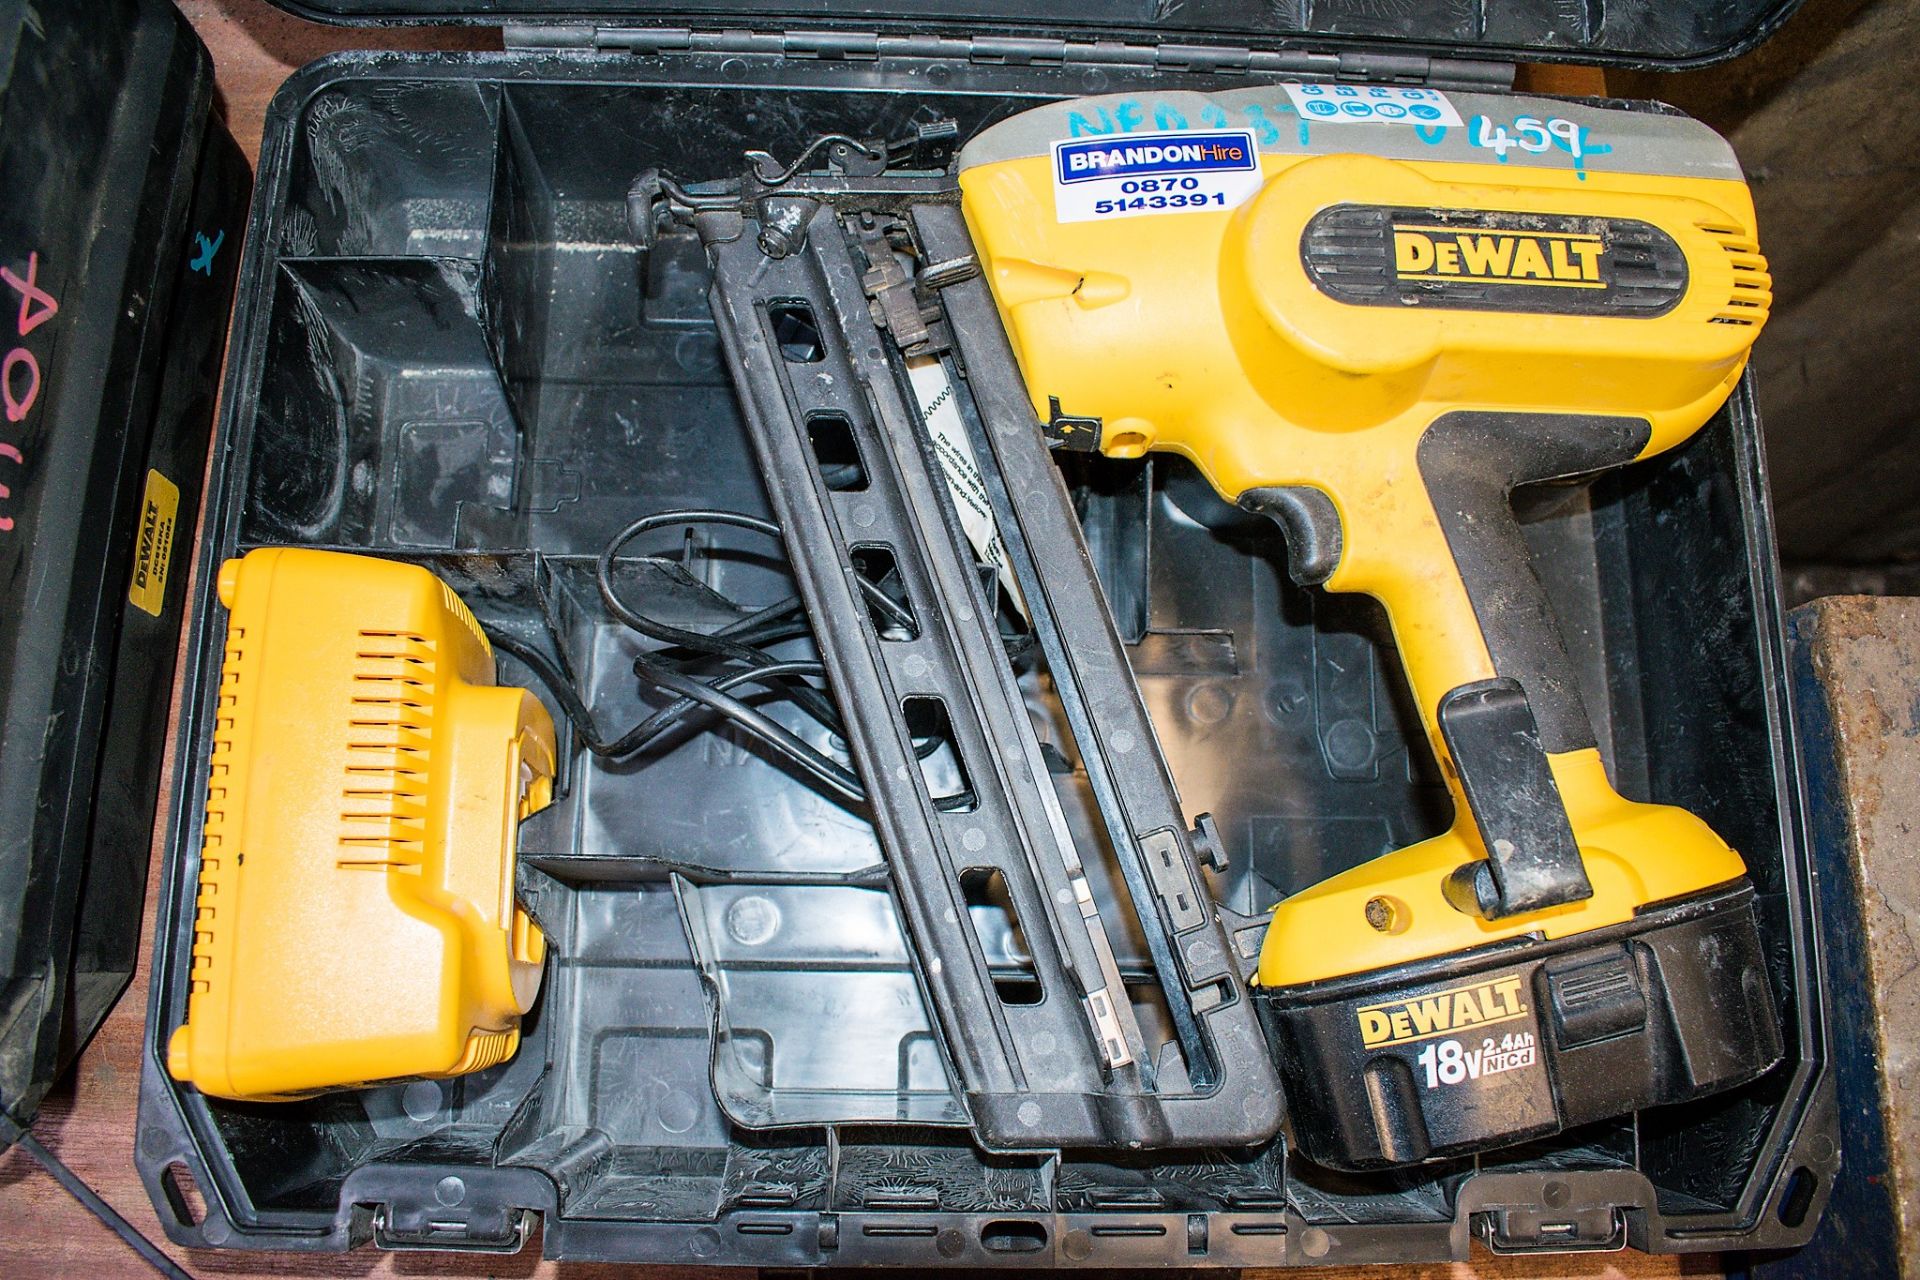 Dewalt 18v cordless nail gun c/w battery, charger & carry case